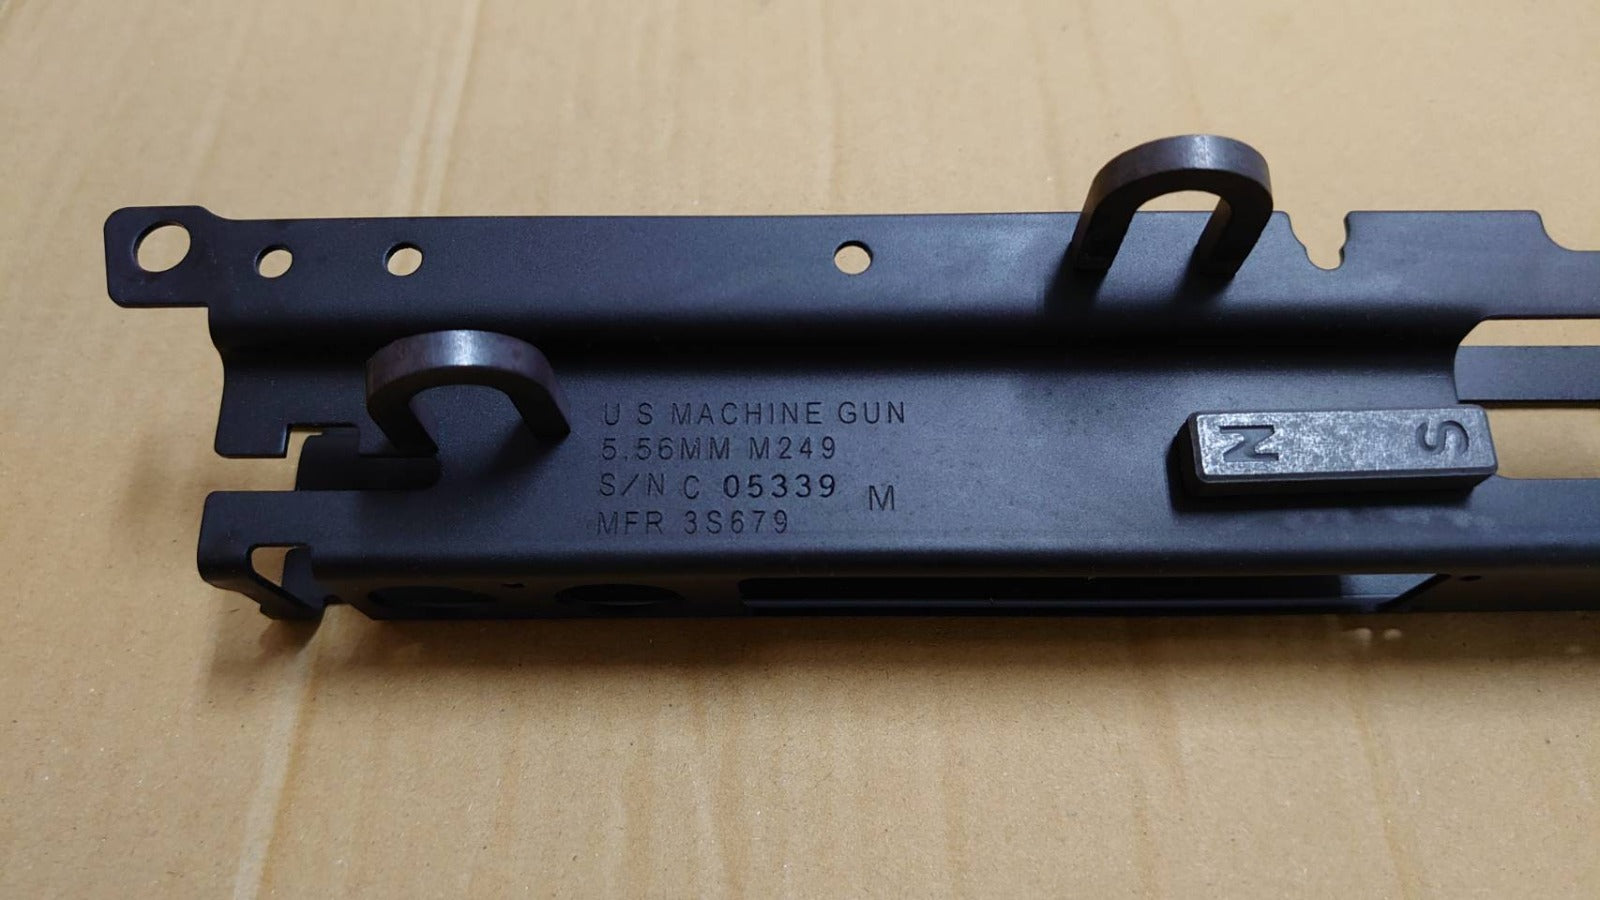 DNA Steel Receiver for VFC M249 GBB